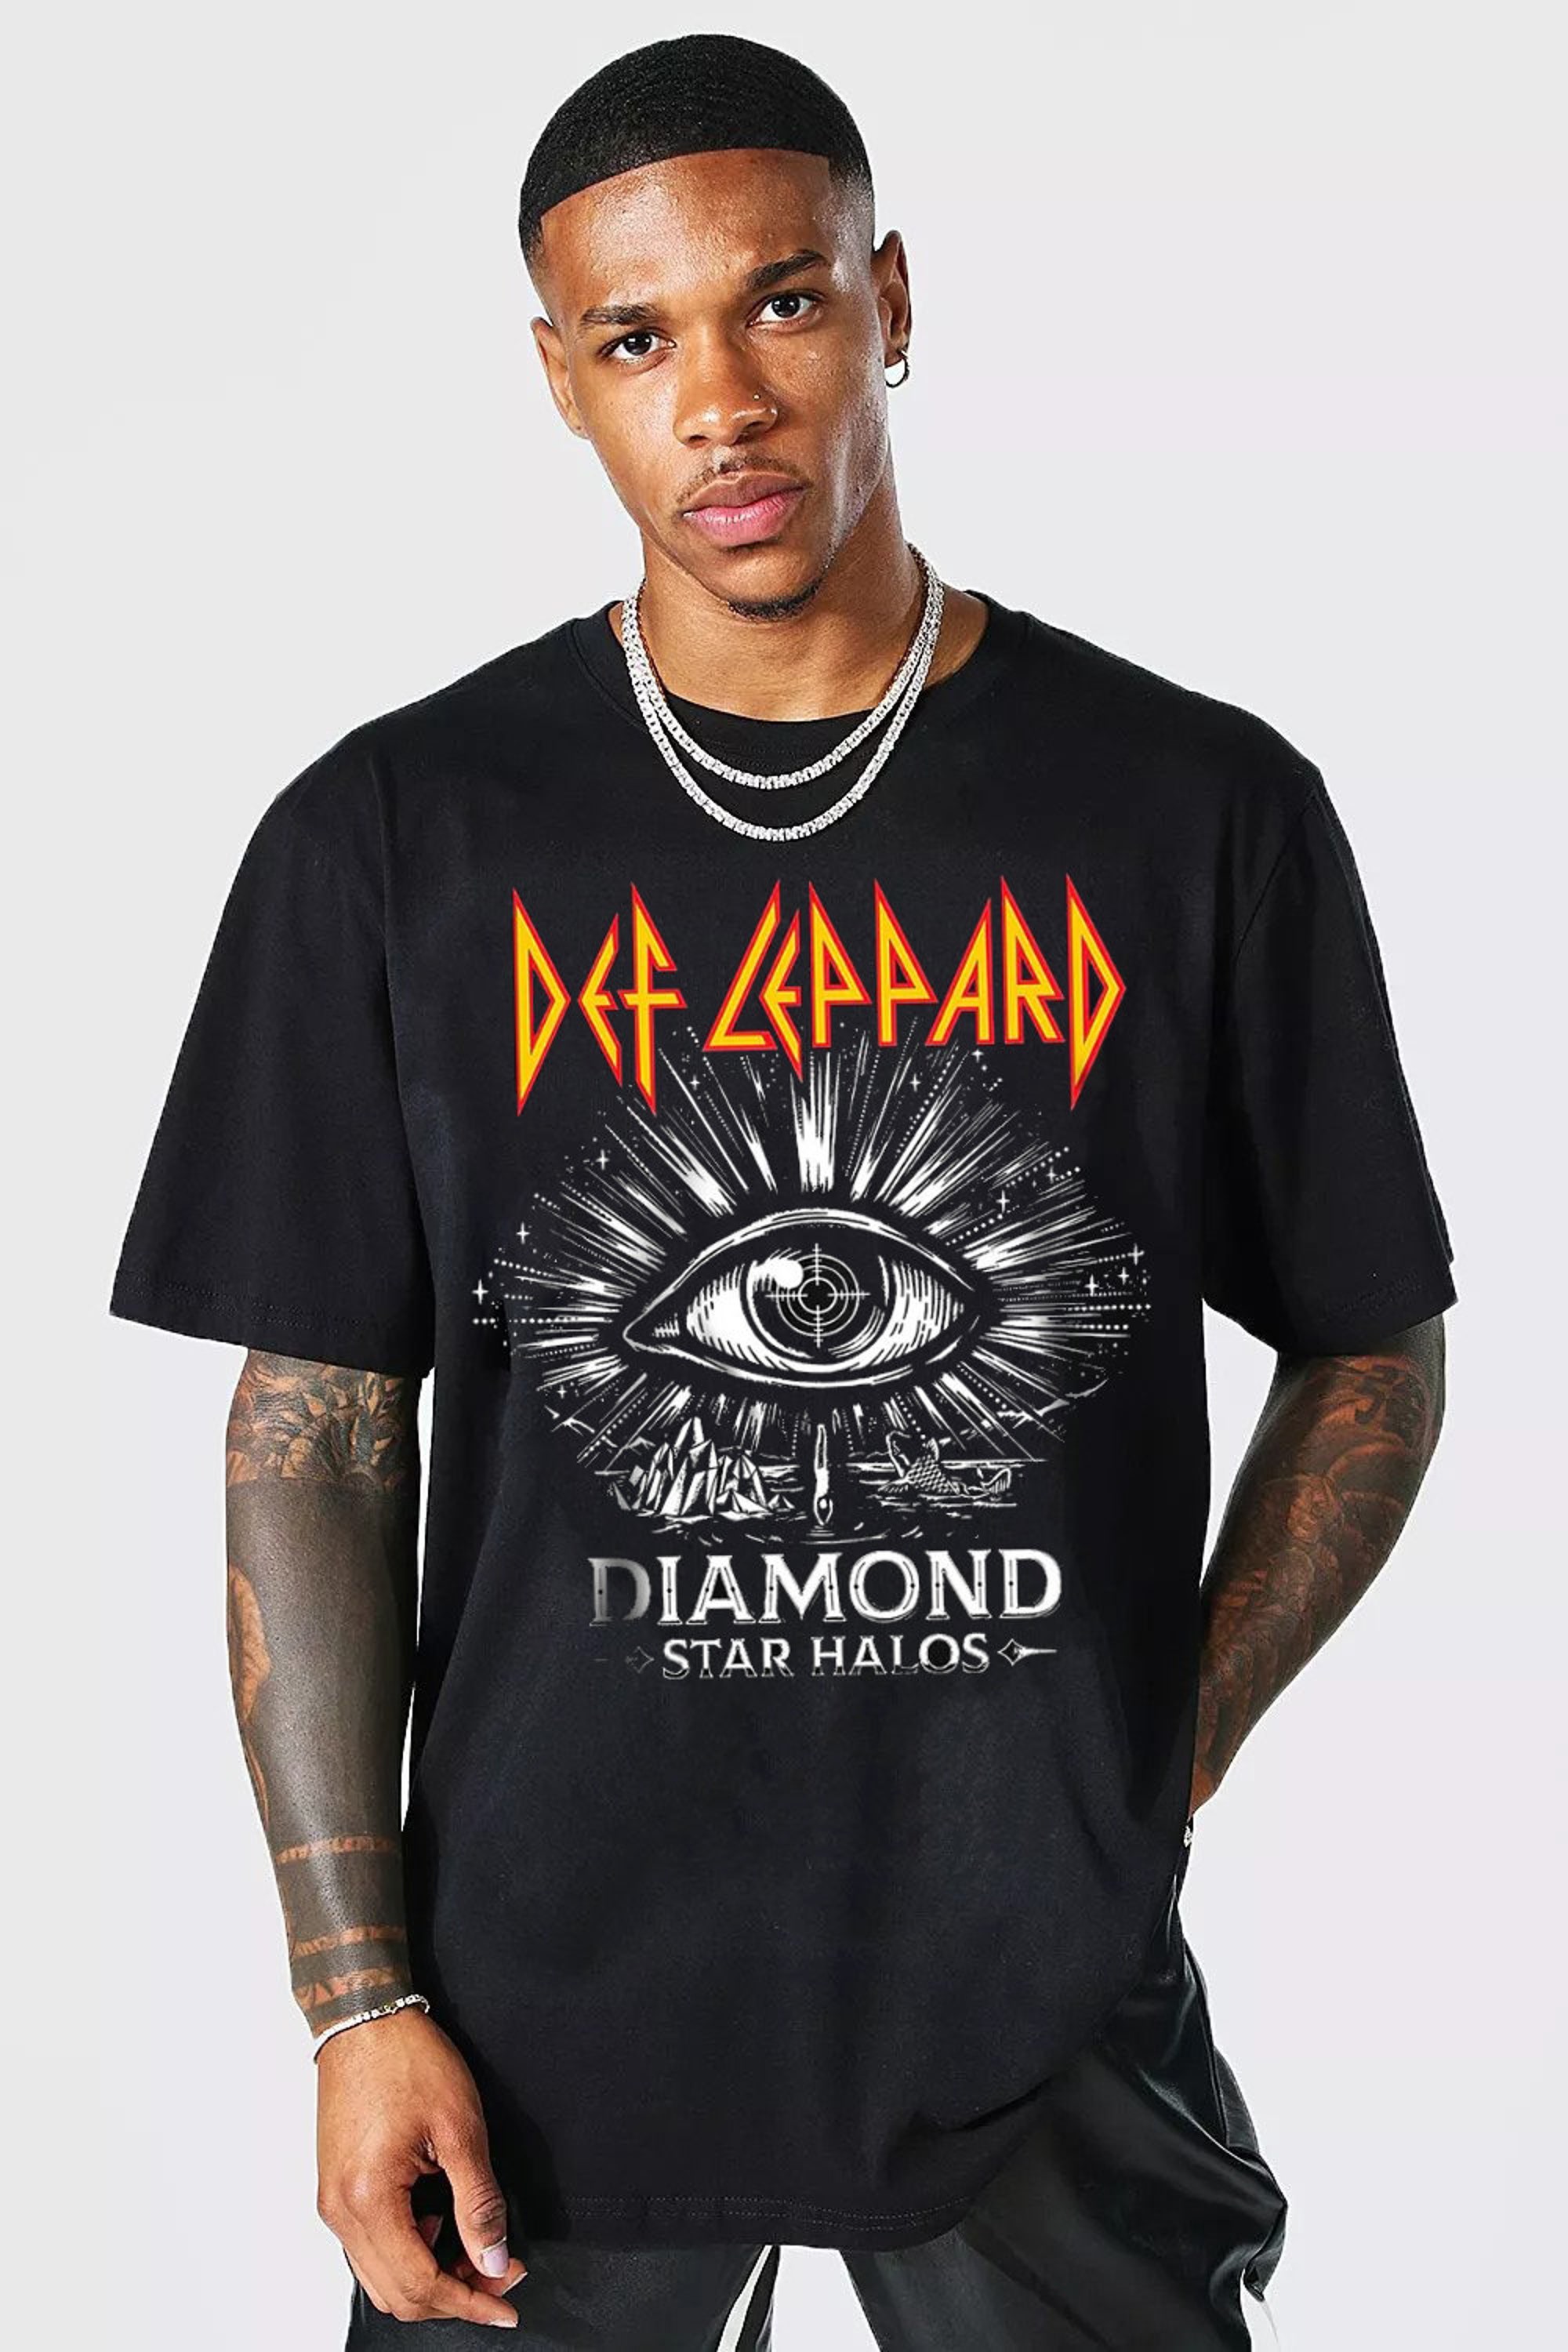 Discover Def Leppard T-Shirt, Def Leppard Diamond Star Halos T-Shirt, Def Leppard Music Tour 2022 T-Shirt